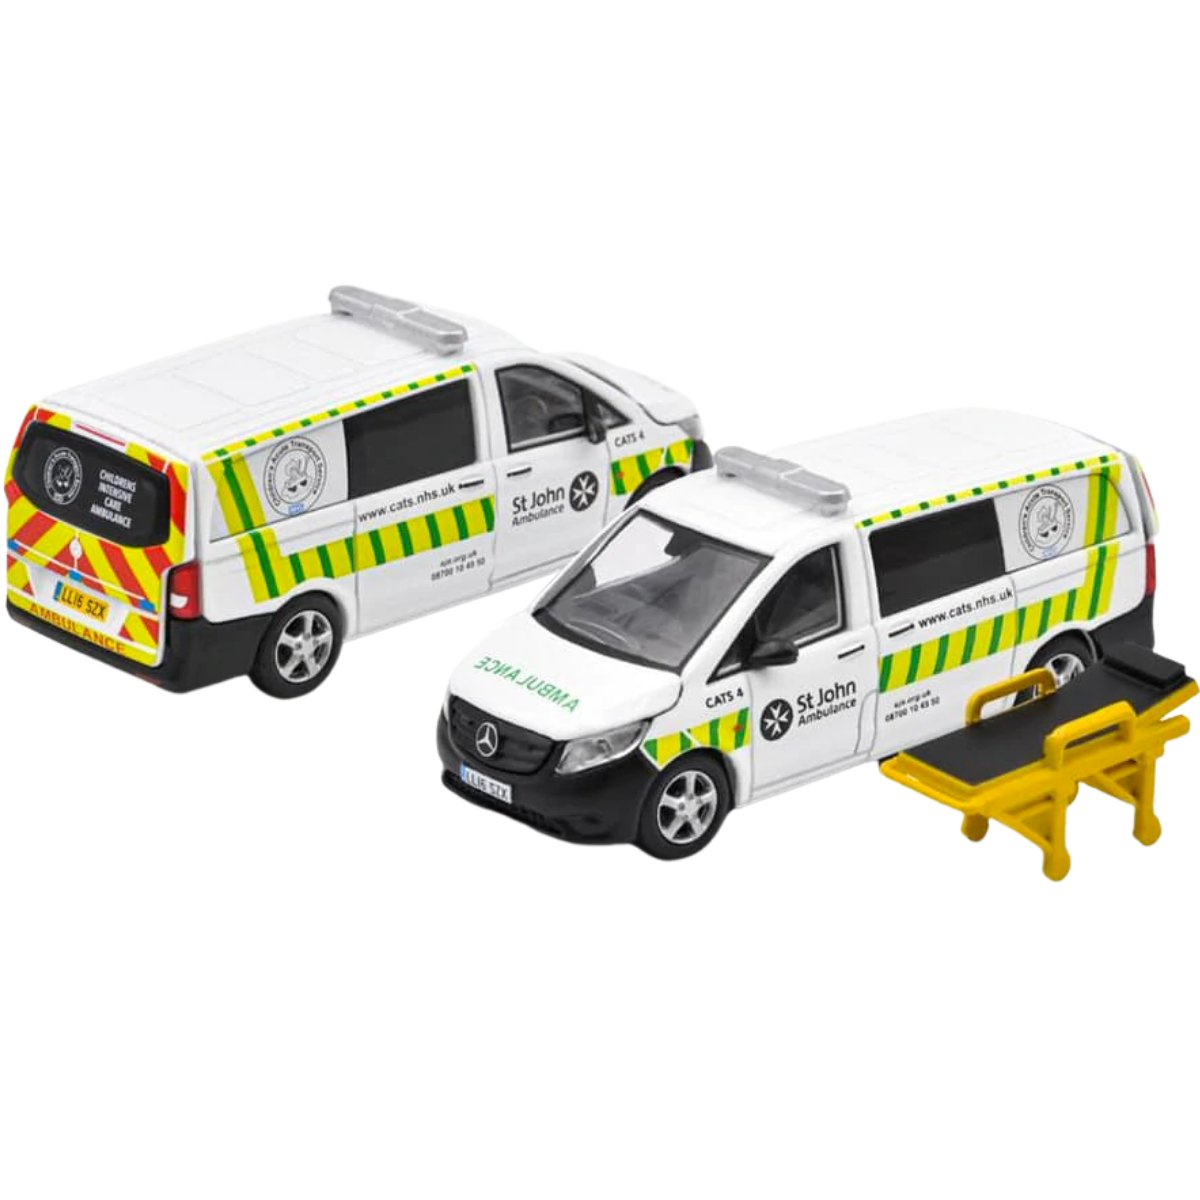 Era Car MB21VITRN58 Mercedes Benz Vito UK St. John Ambulance - 1:64 Scale Model